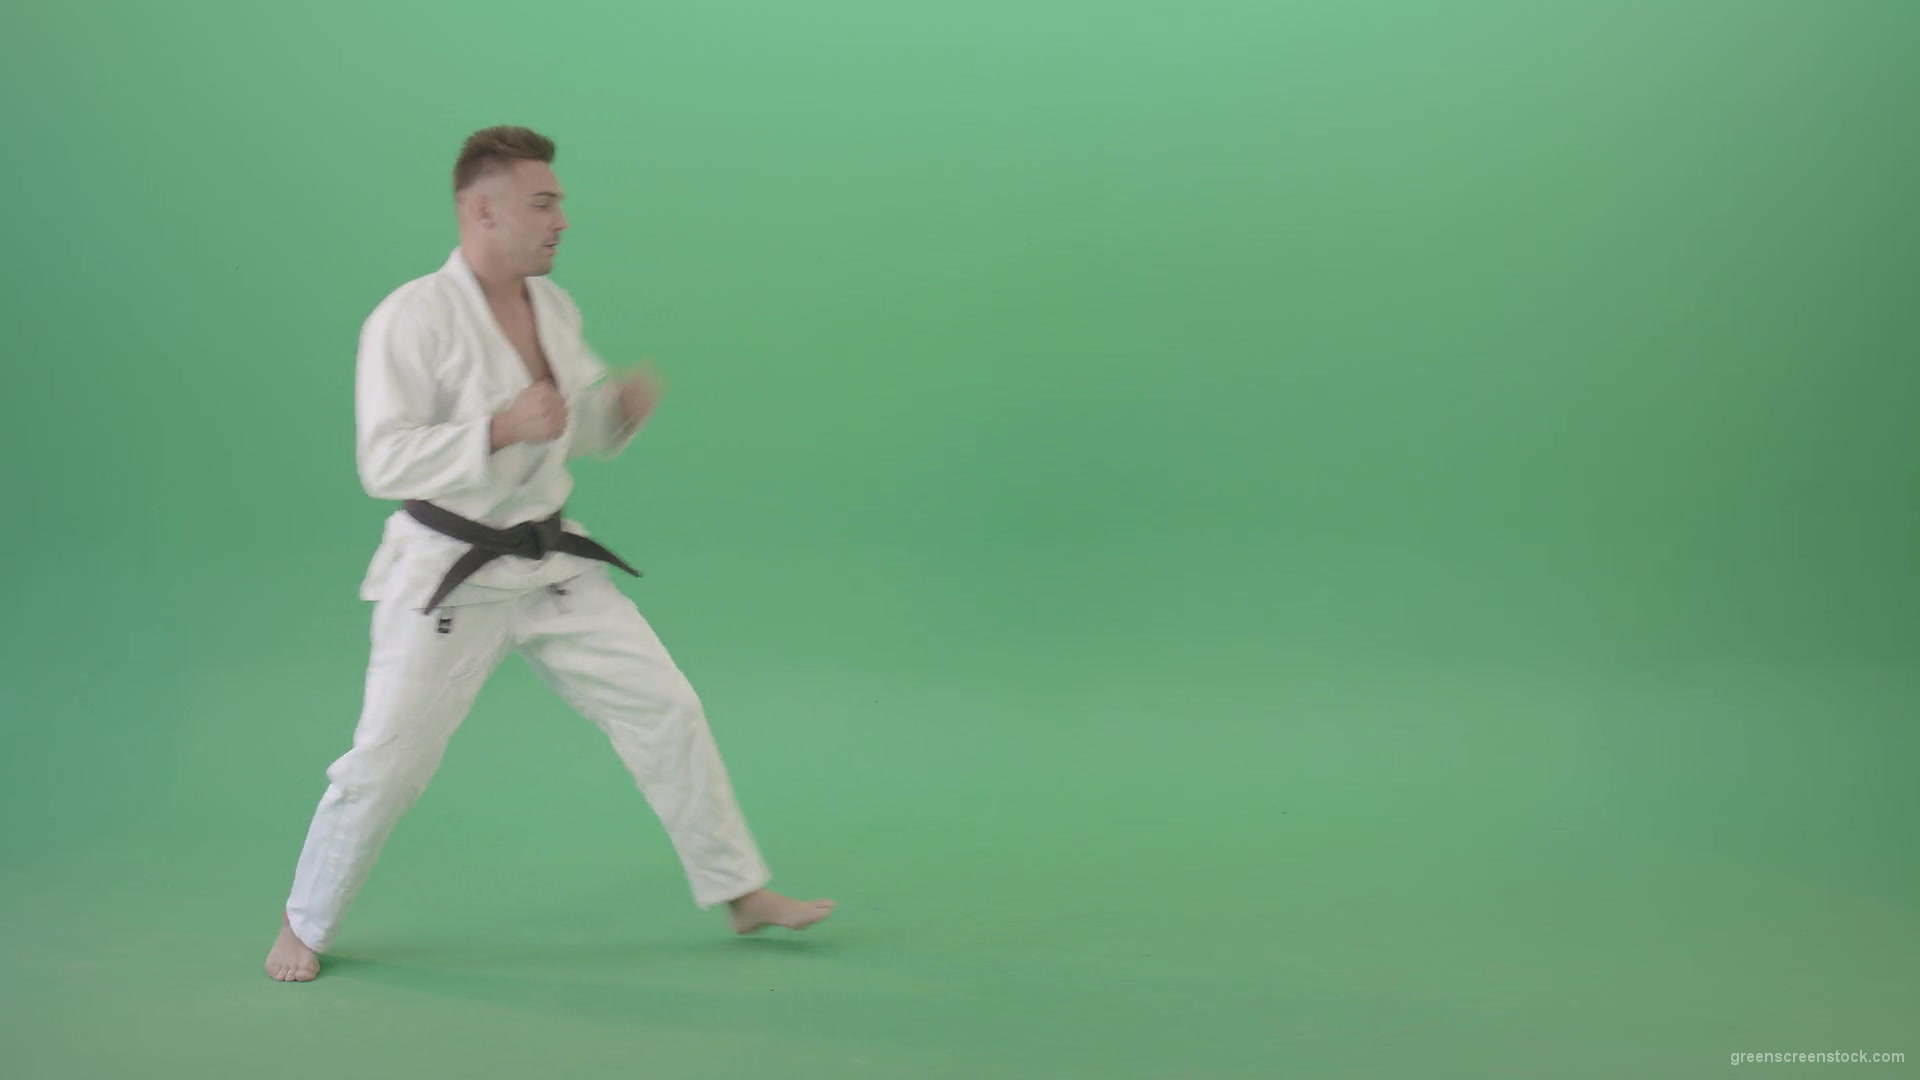 Ju-jutsu-young-man-training-slowly-karate-isolated-on-green-screen-4K-Video-Footage-1920_005 Green Screen Stock